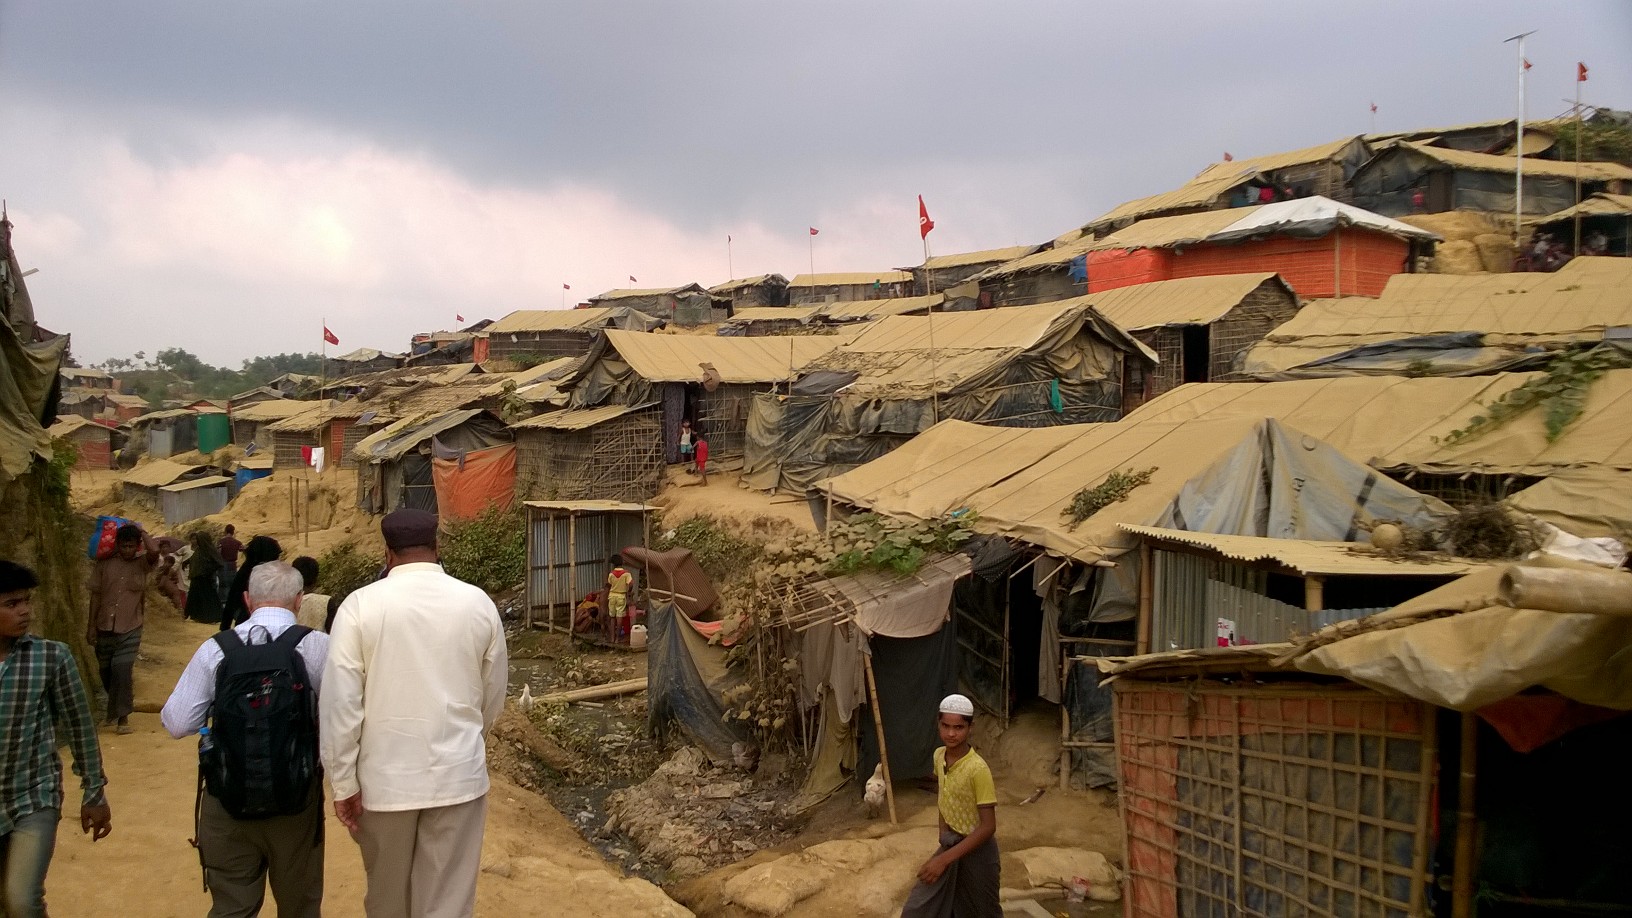 Rabbi David Saperstein visits a refugee camp in Bangladesh 